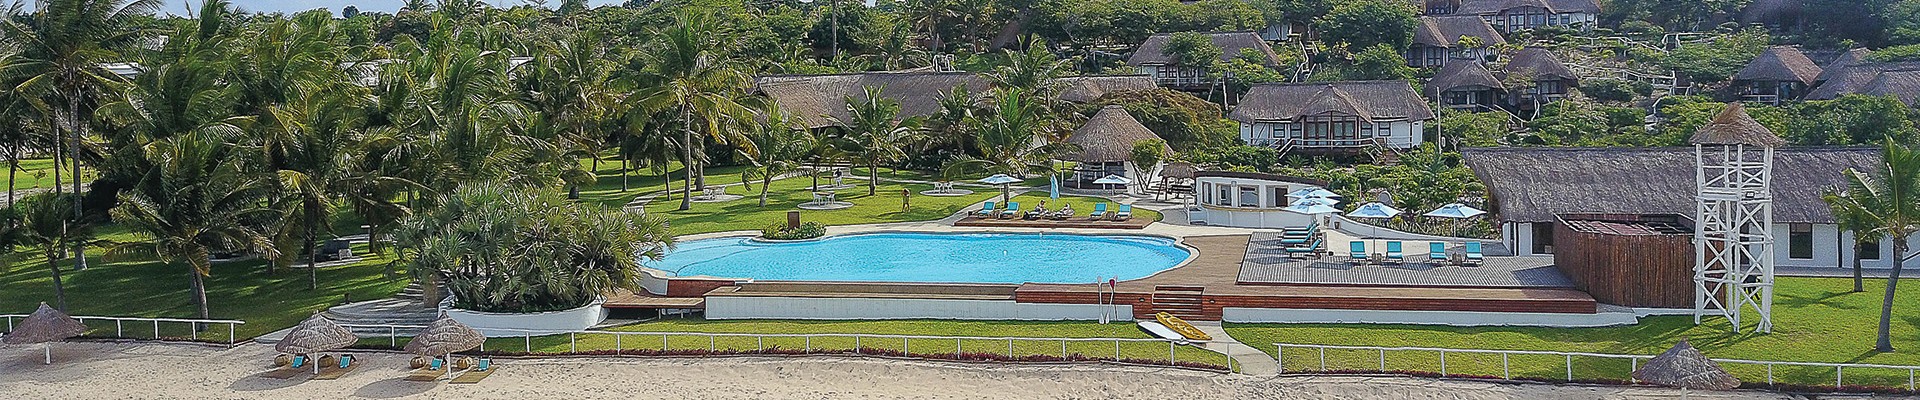 3* Plus Vilanculos Beach Lodge - Mozambique Package (4 nights)